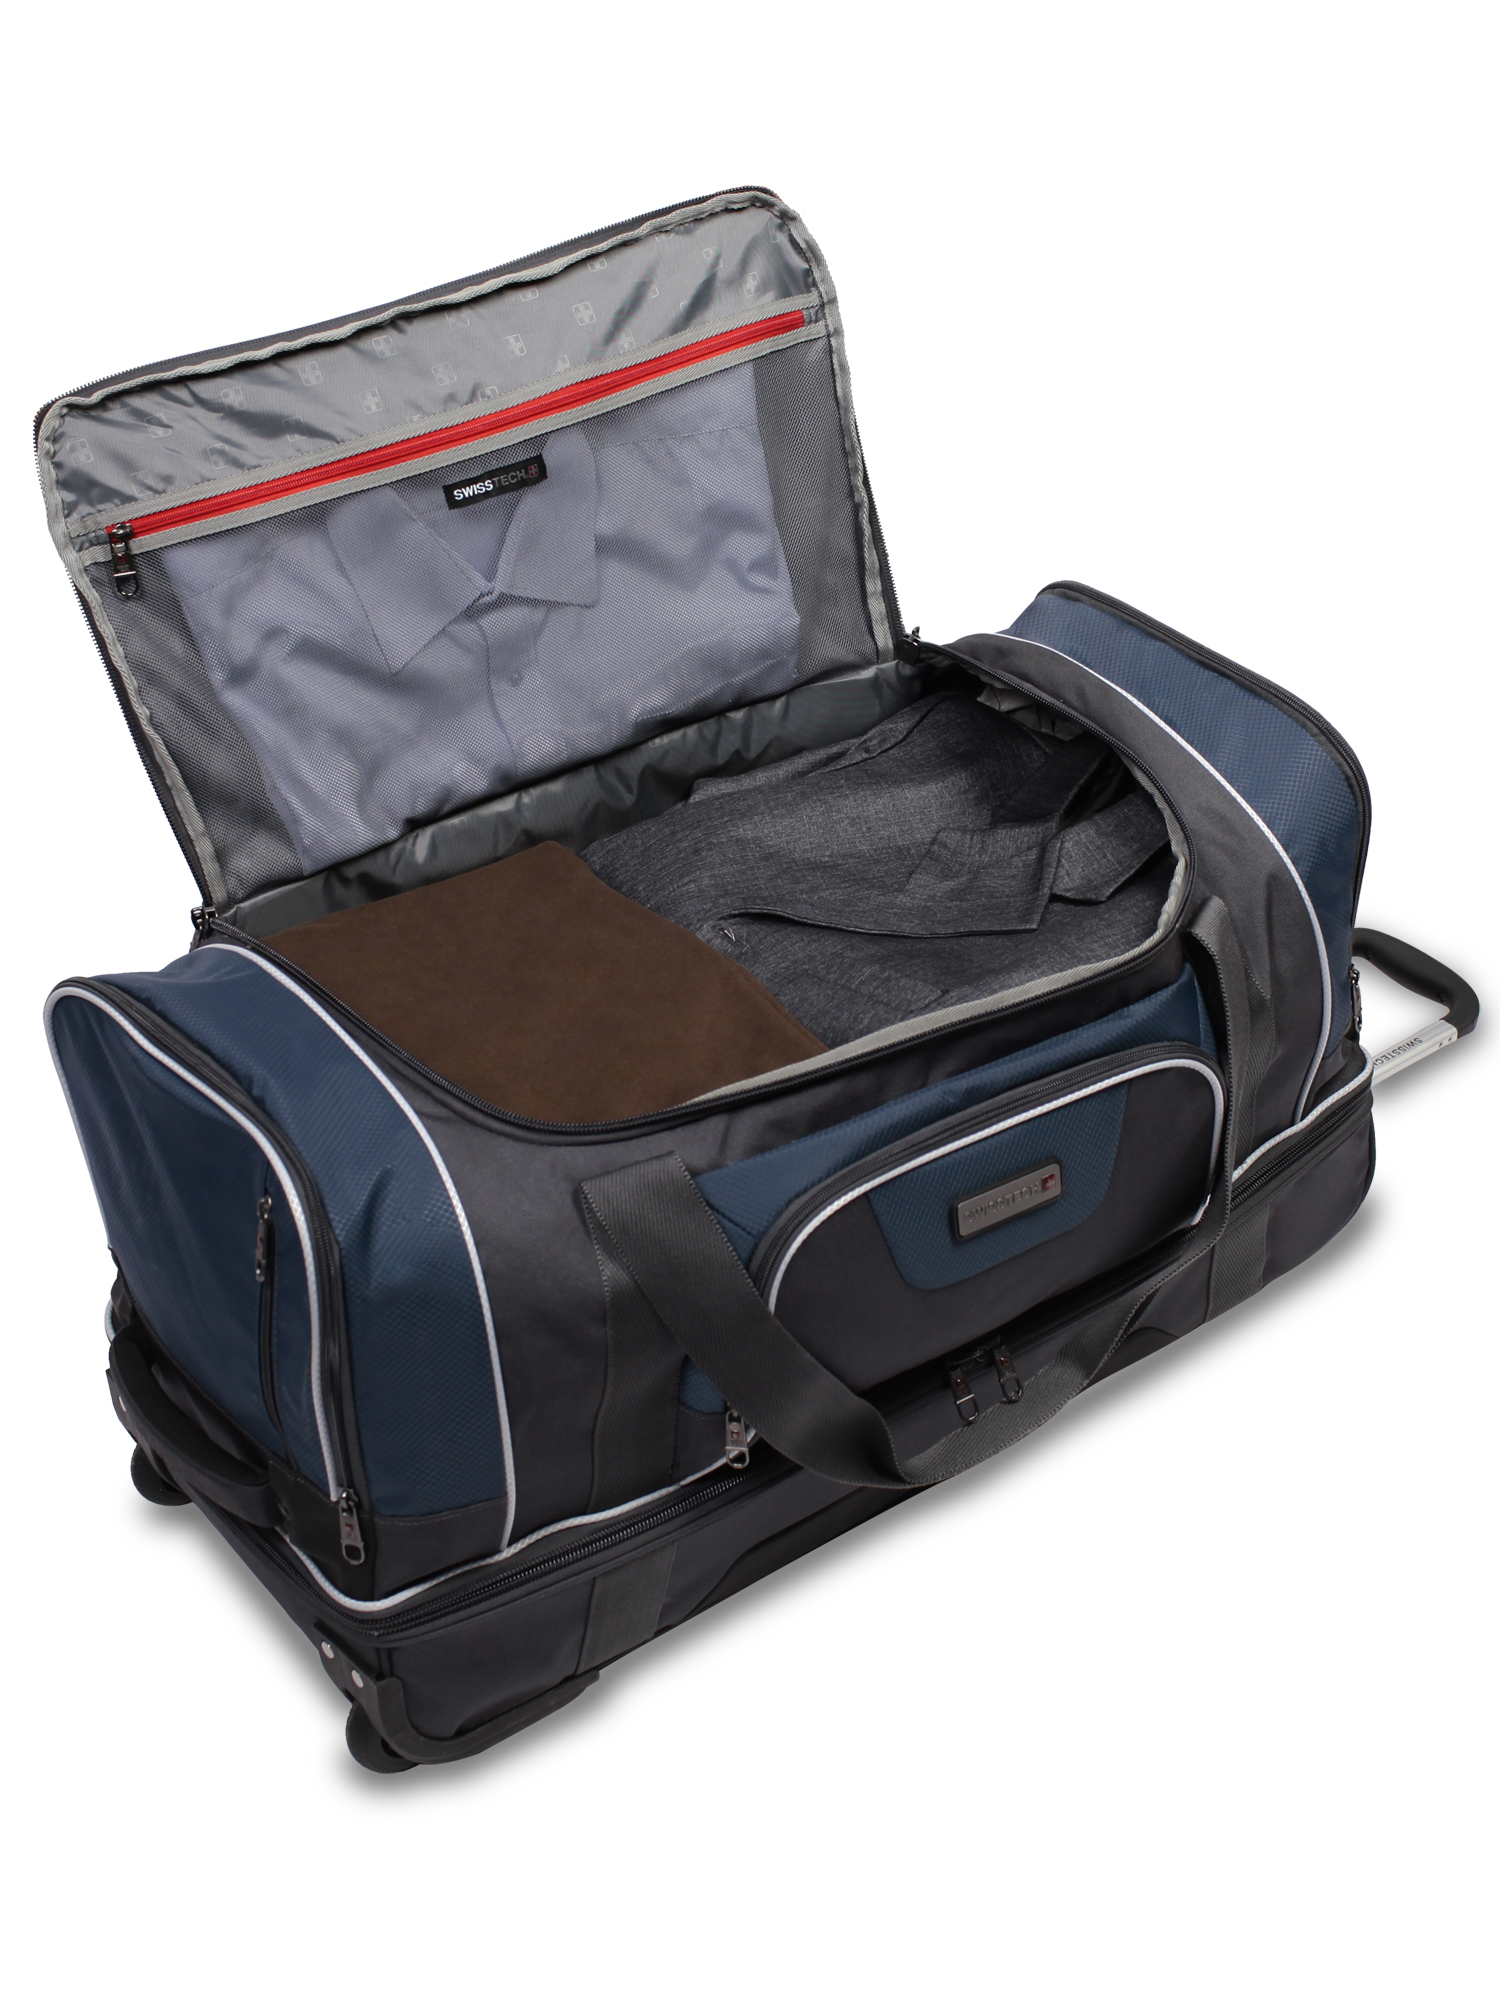 SwissTech Wanderer 30" Rolling Drop Bottom Travel Duffel Bag, Blue - image 4 of 14